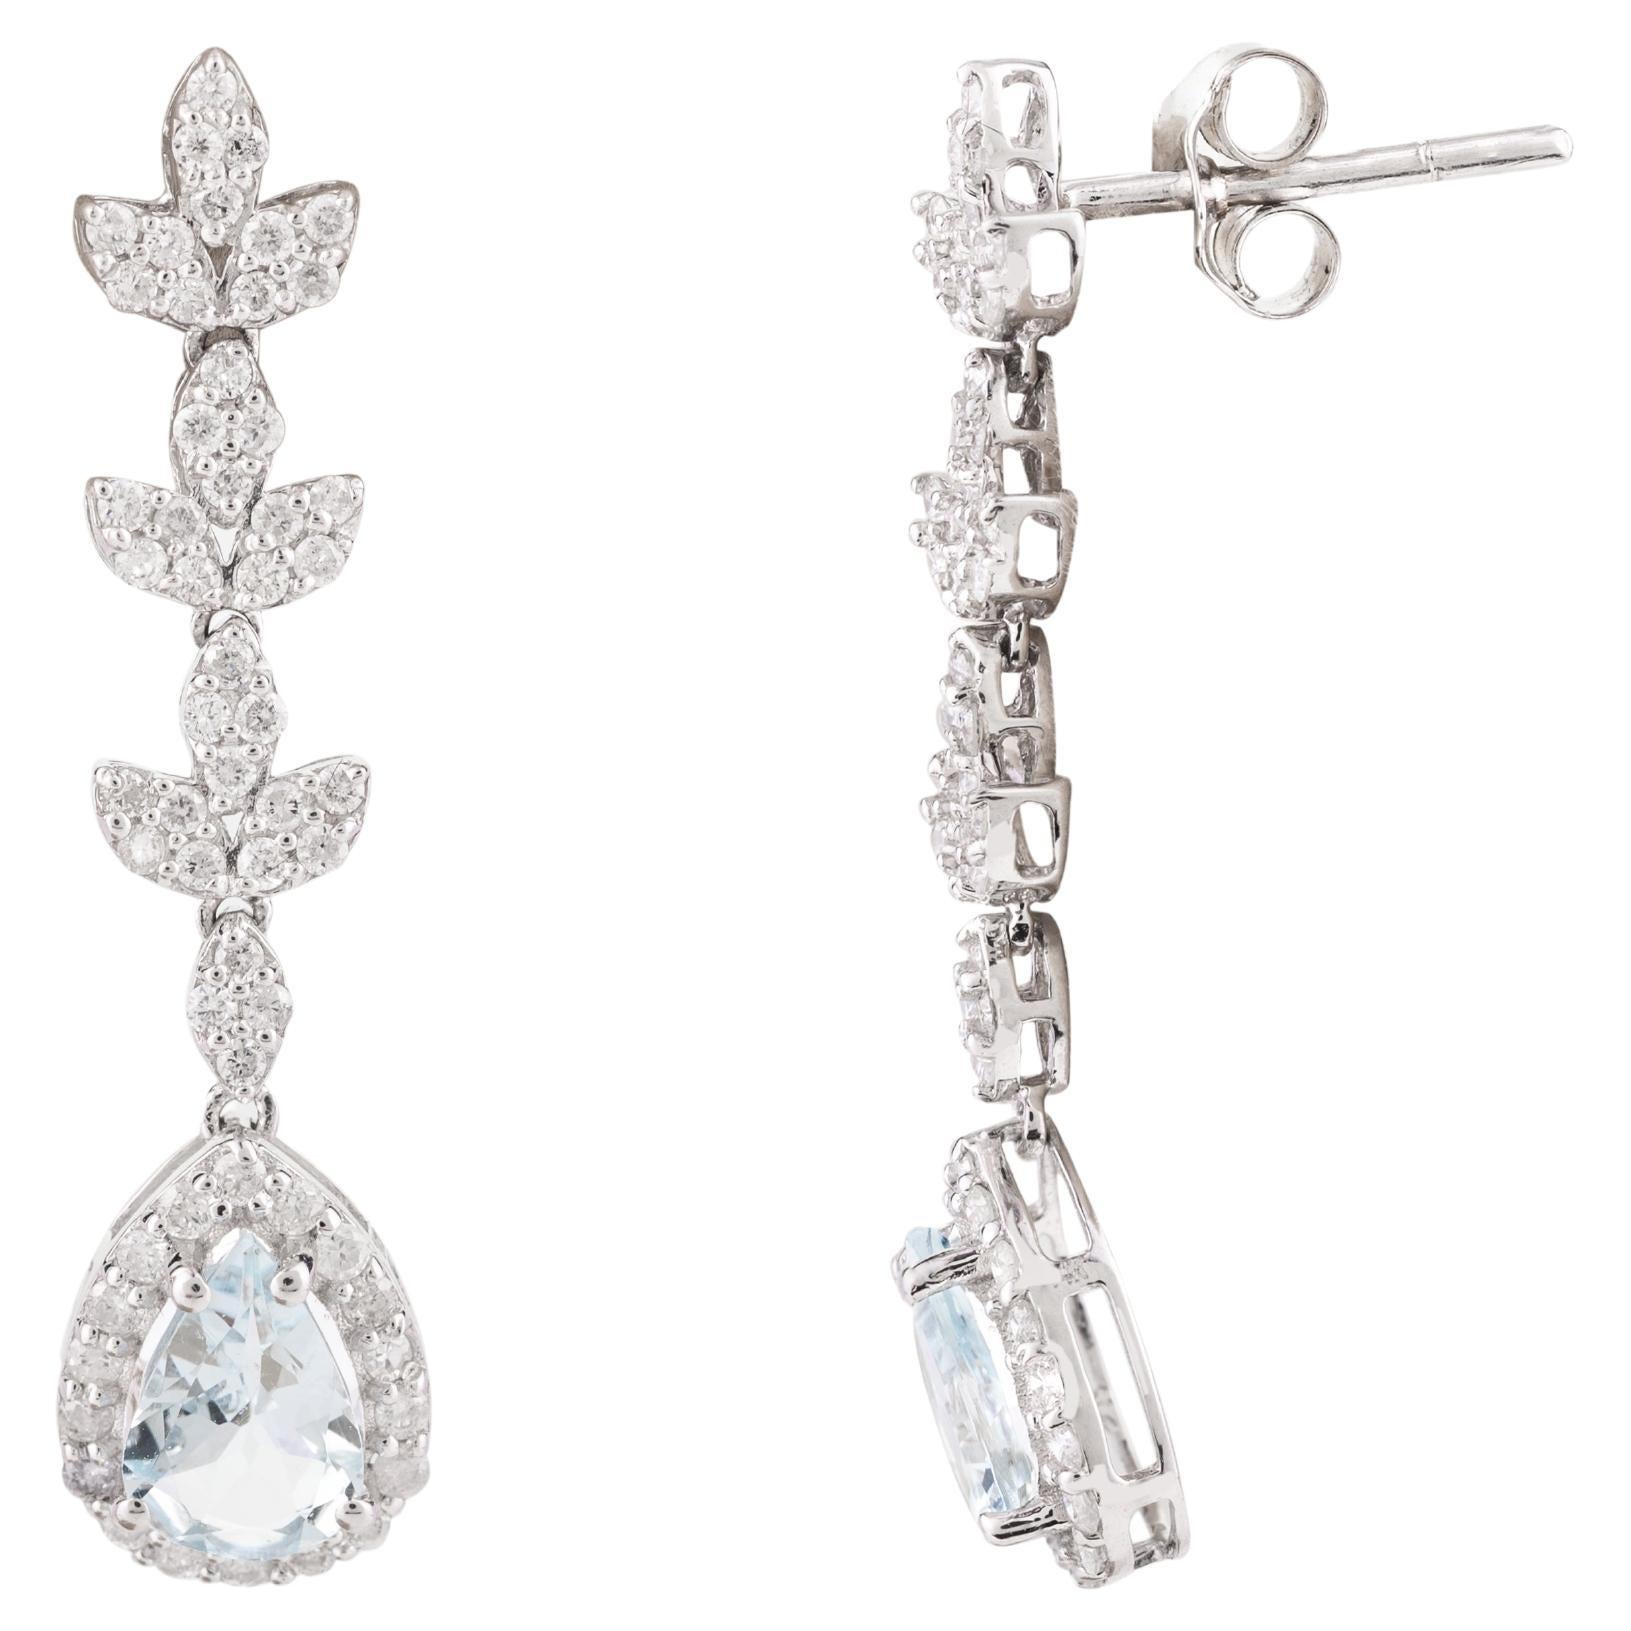 Certified Aquamarine Diamond Long Dangle Earrings in 14k White Gold